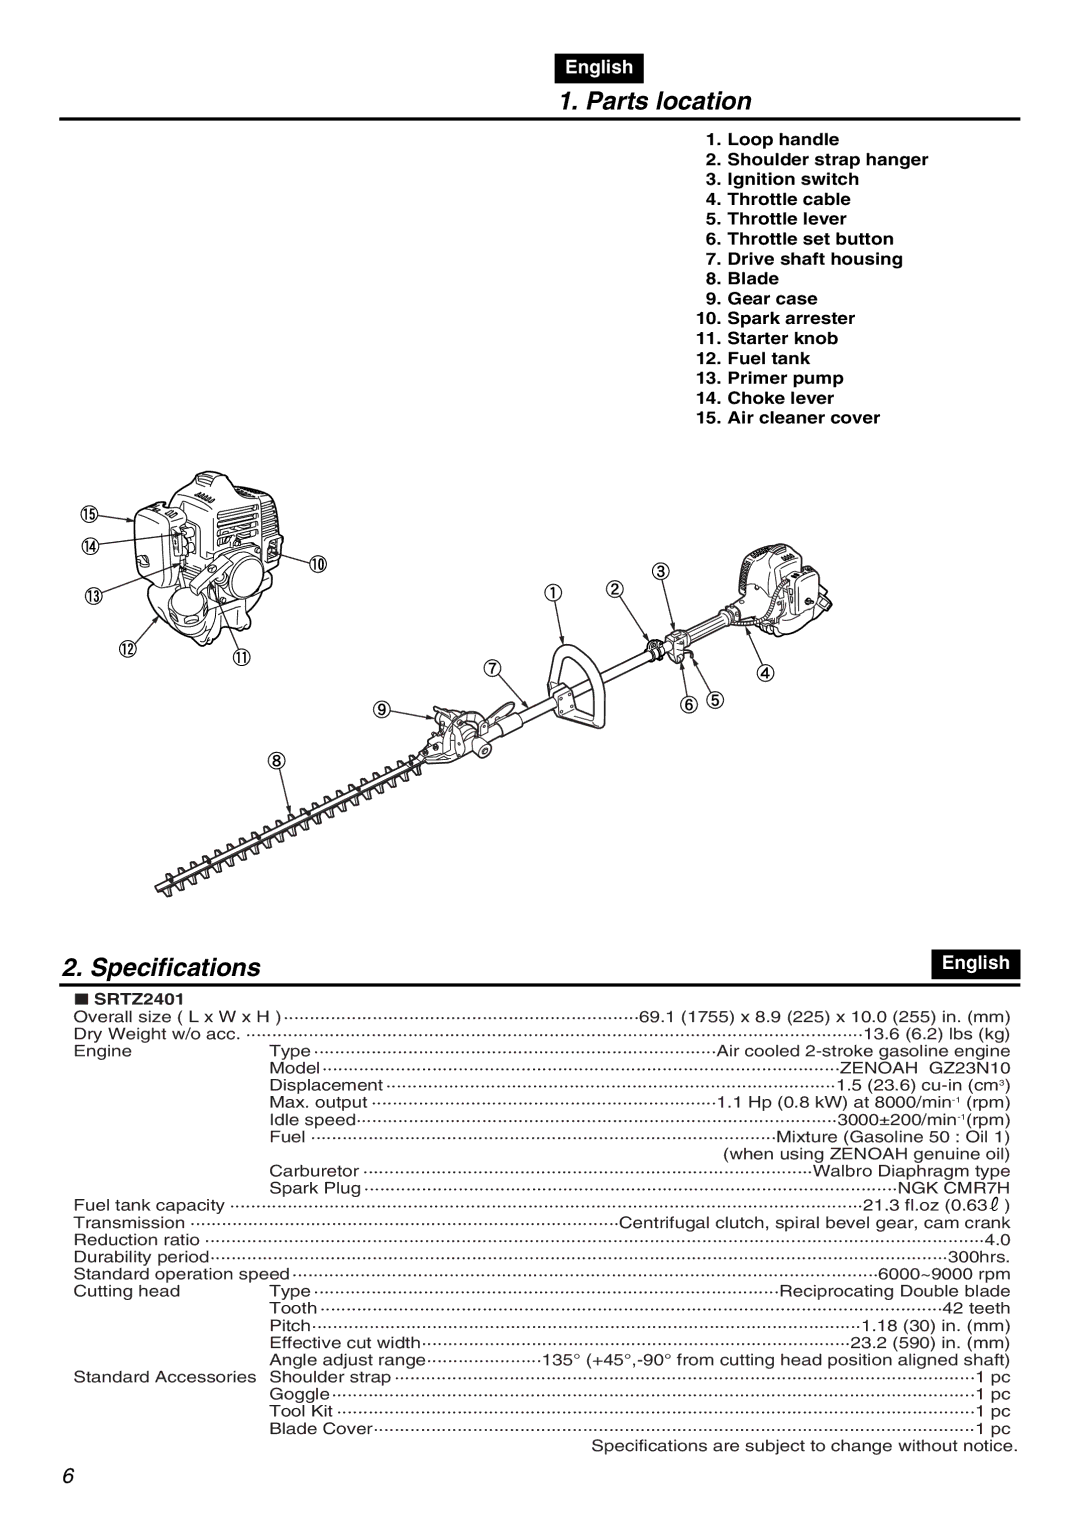 RedMax SRTZ2401 manual Parts location, Specifications 